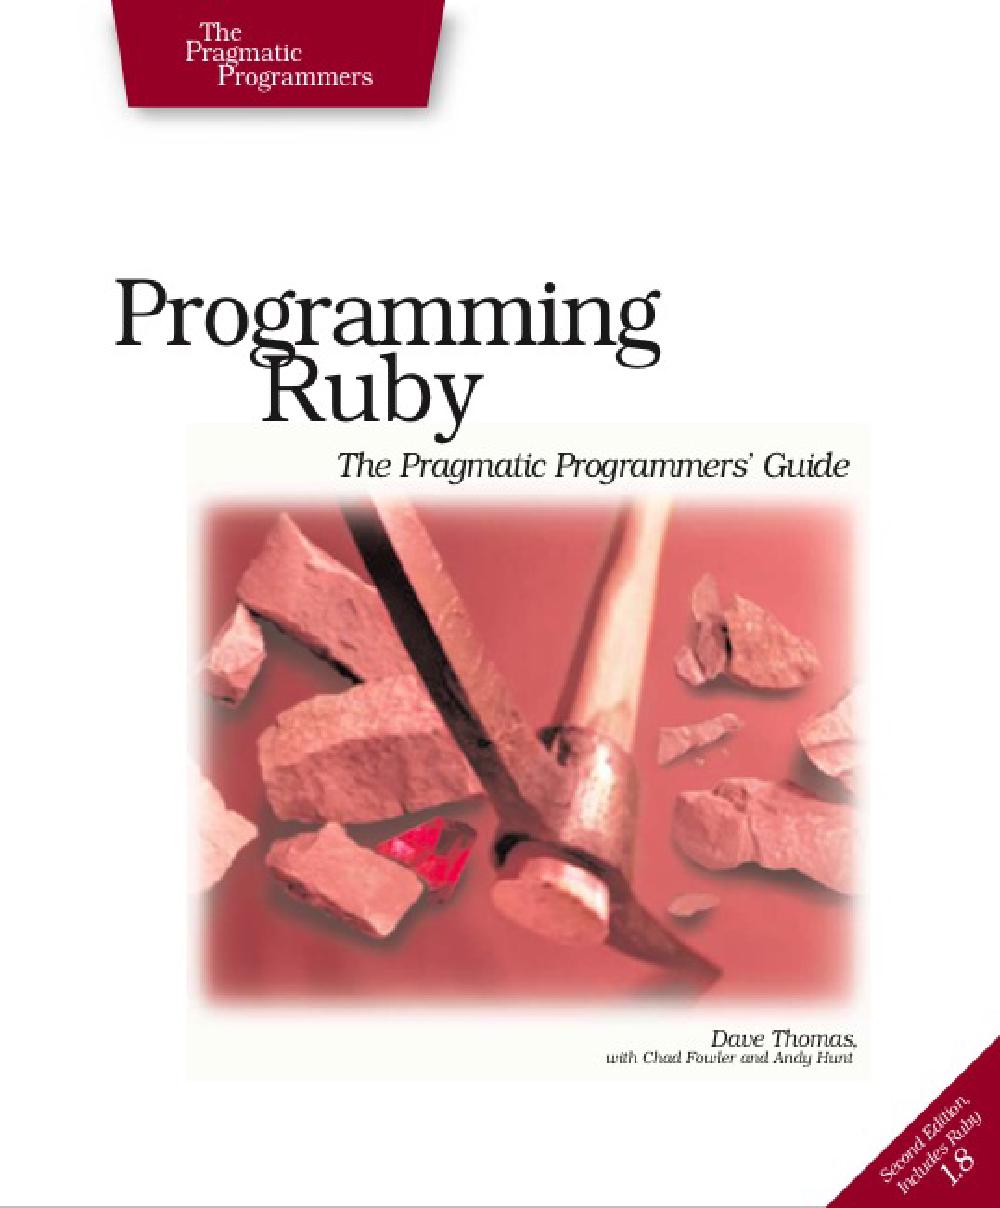 Руби на английском. Книги по Ruby. Самоучитель Ruby. Программирование Ruby книга.